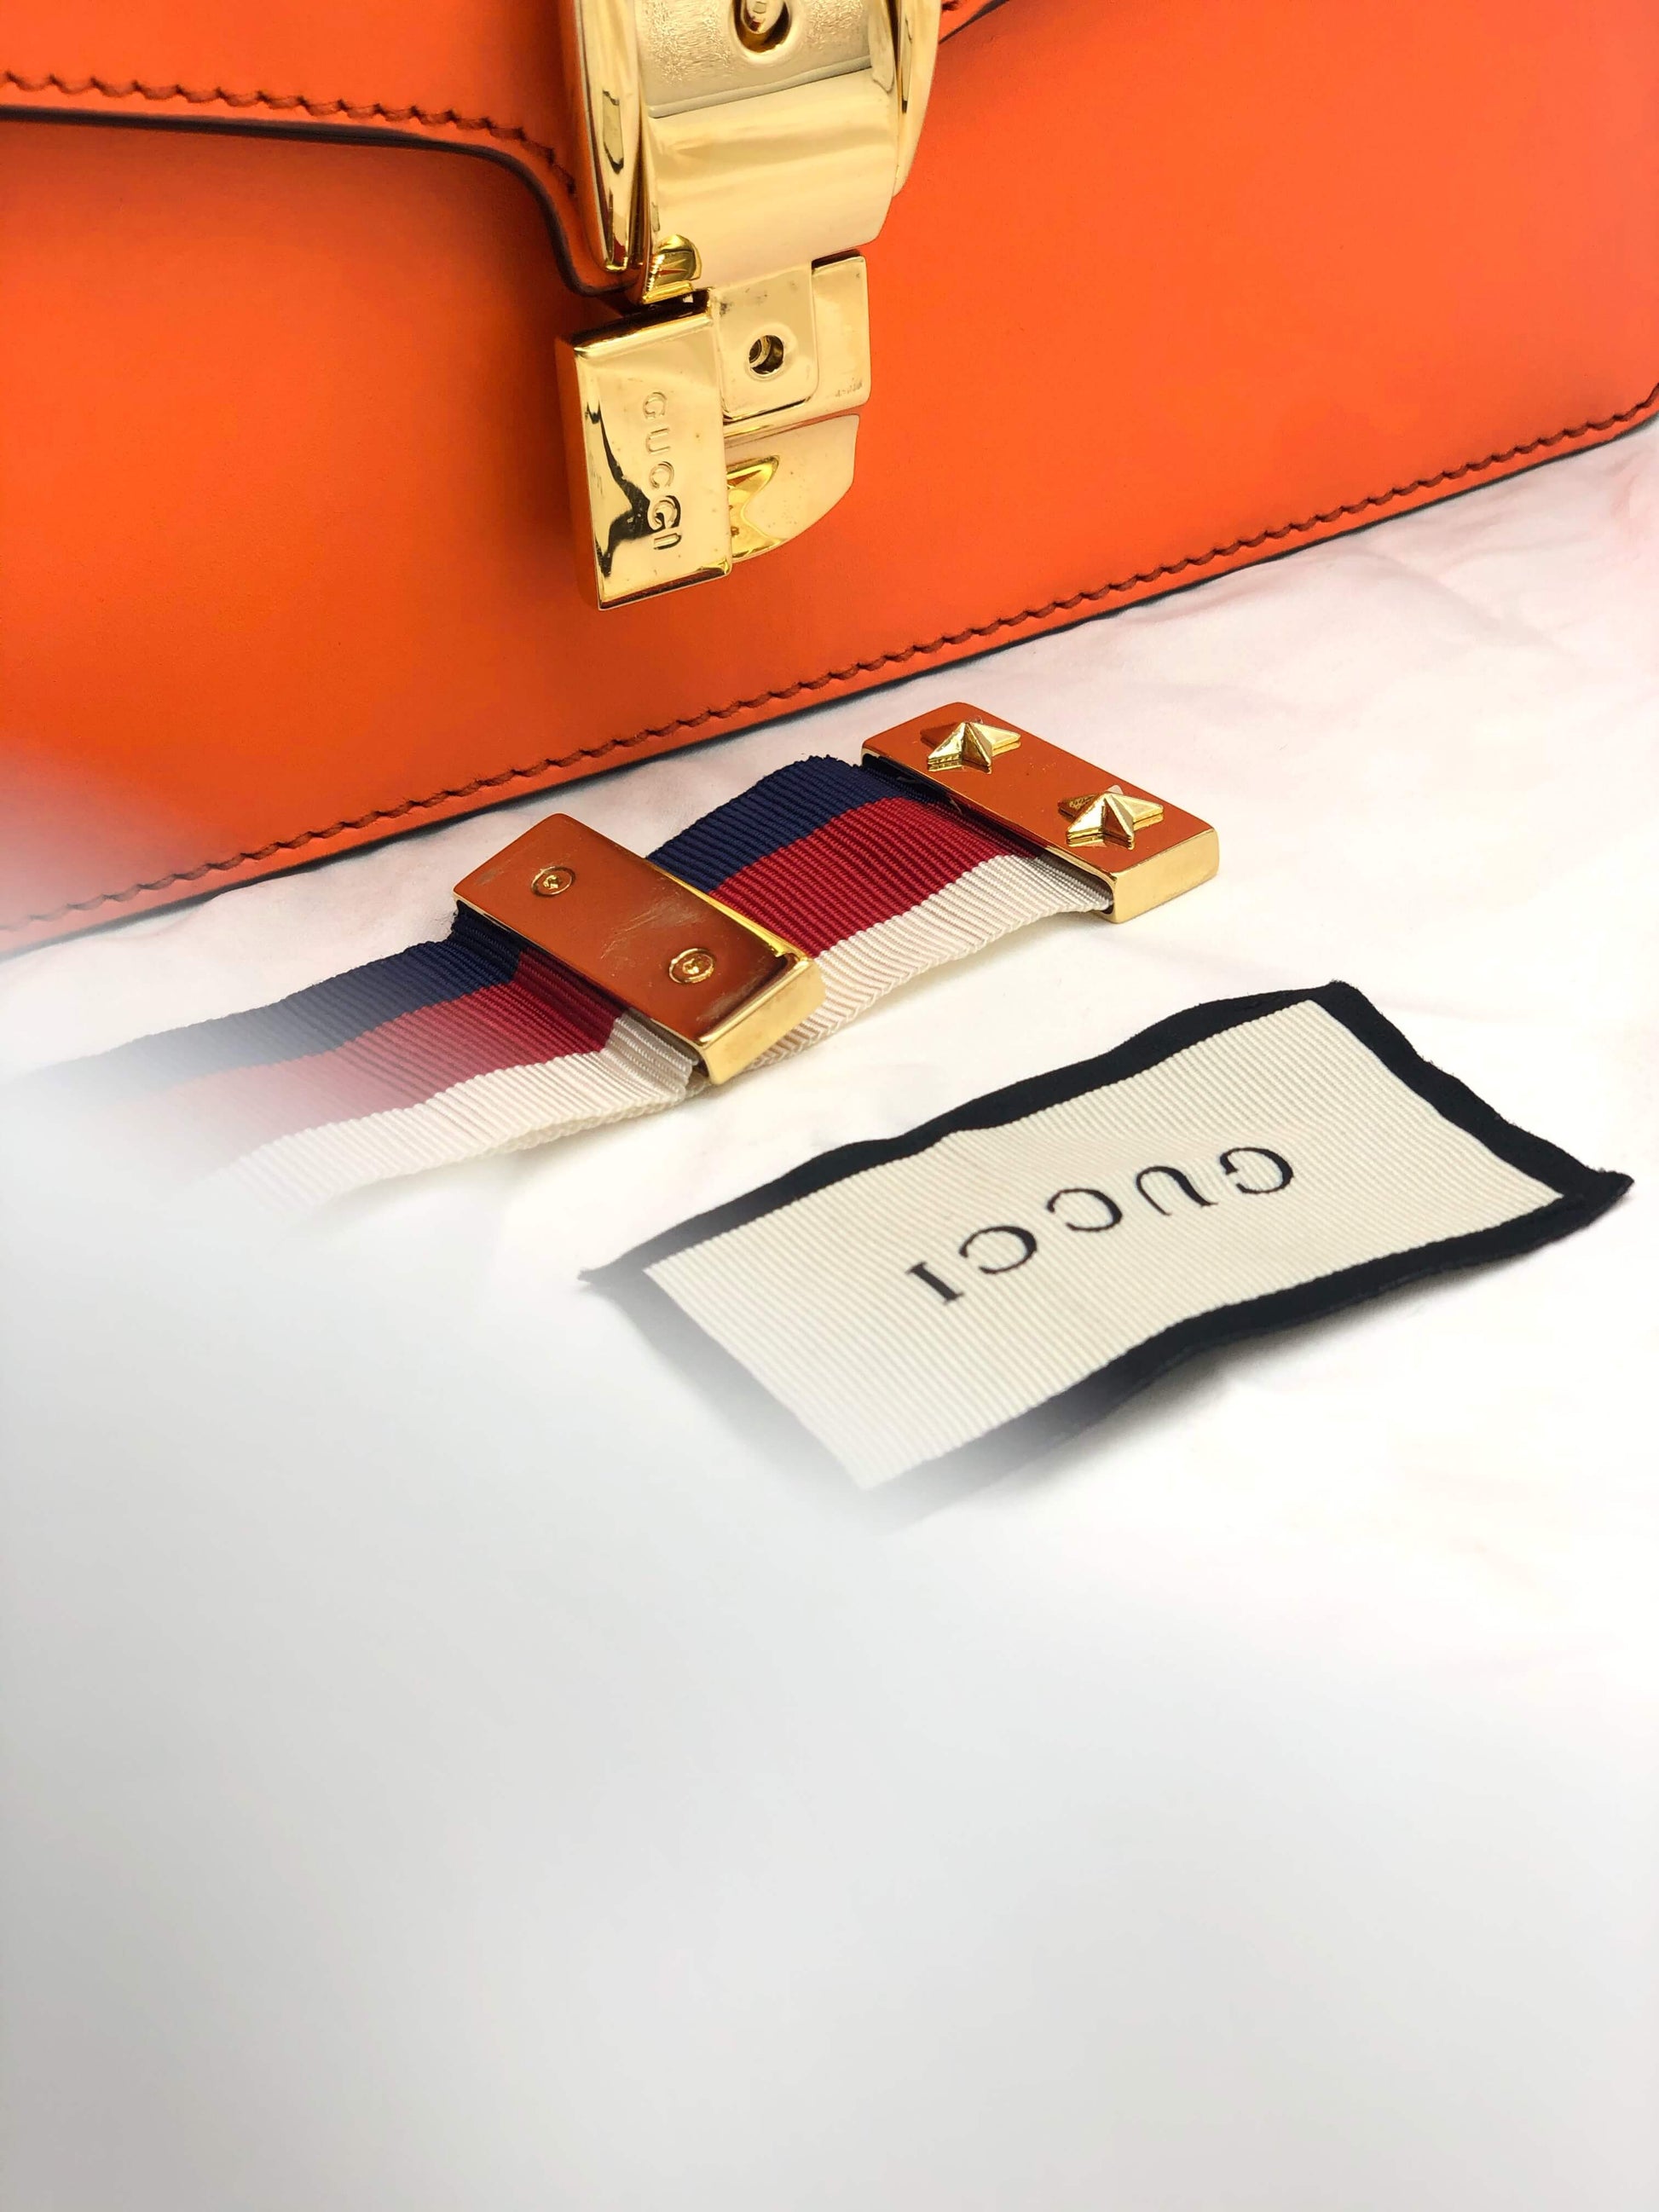 Gucci Orange Sylvie Shoulder Bag